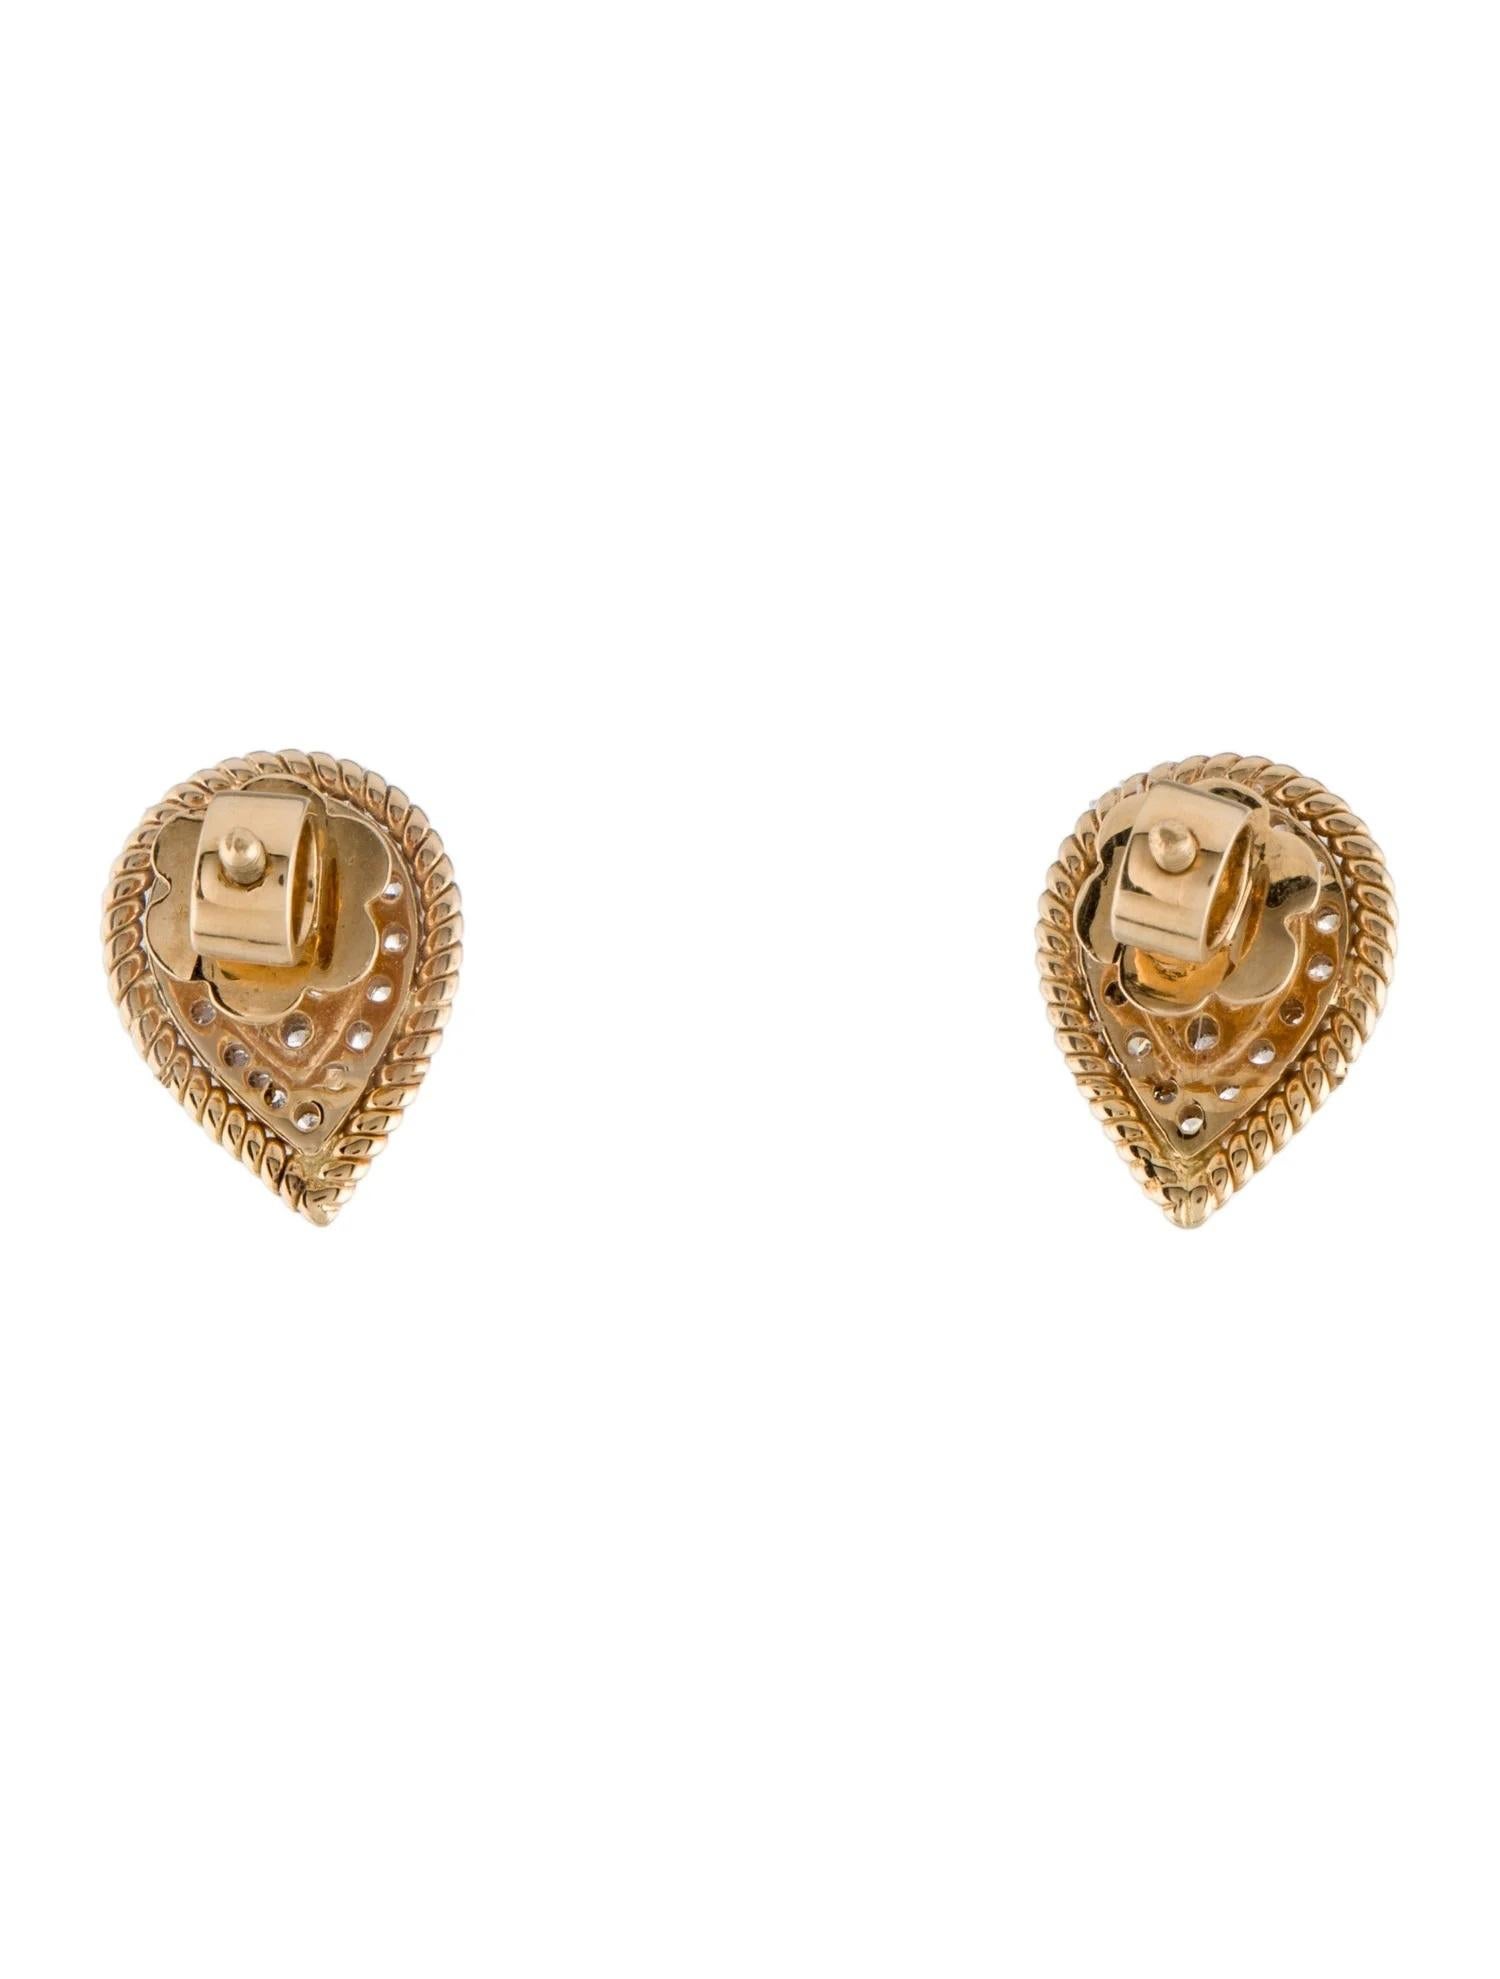 Artist  18K Yellow Gold Diamond Stud Earrings, 0.56 Carats For Sale